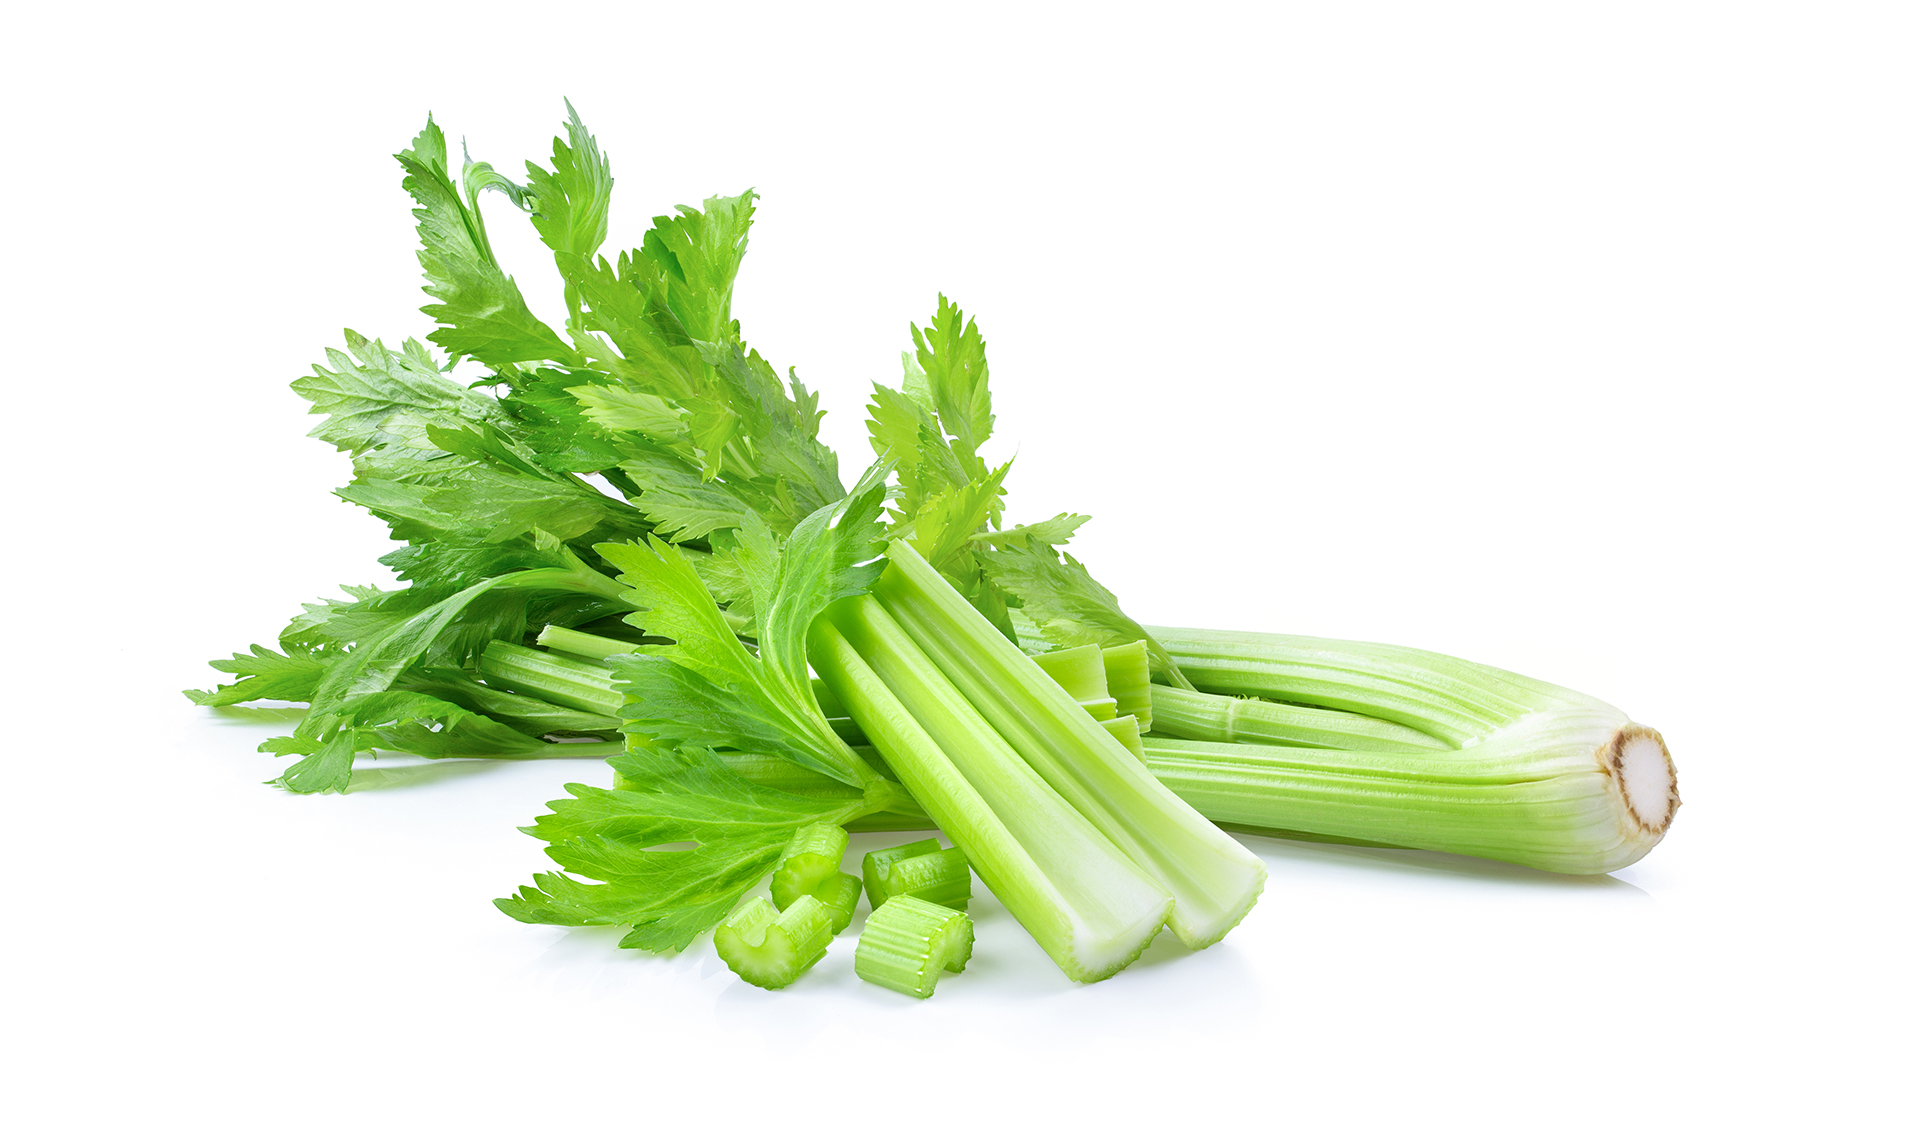 celery juice benefits